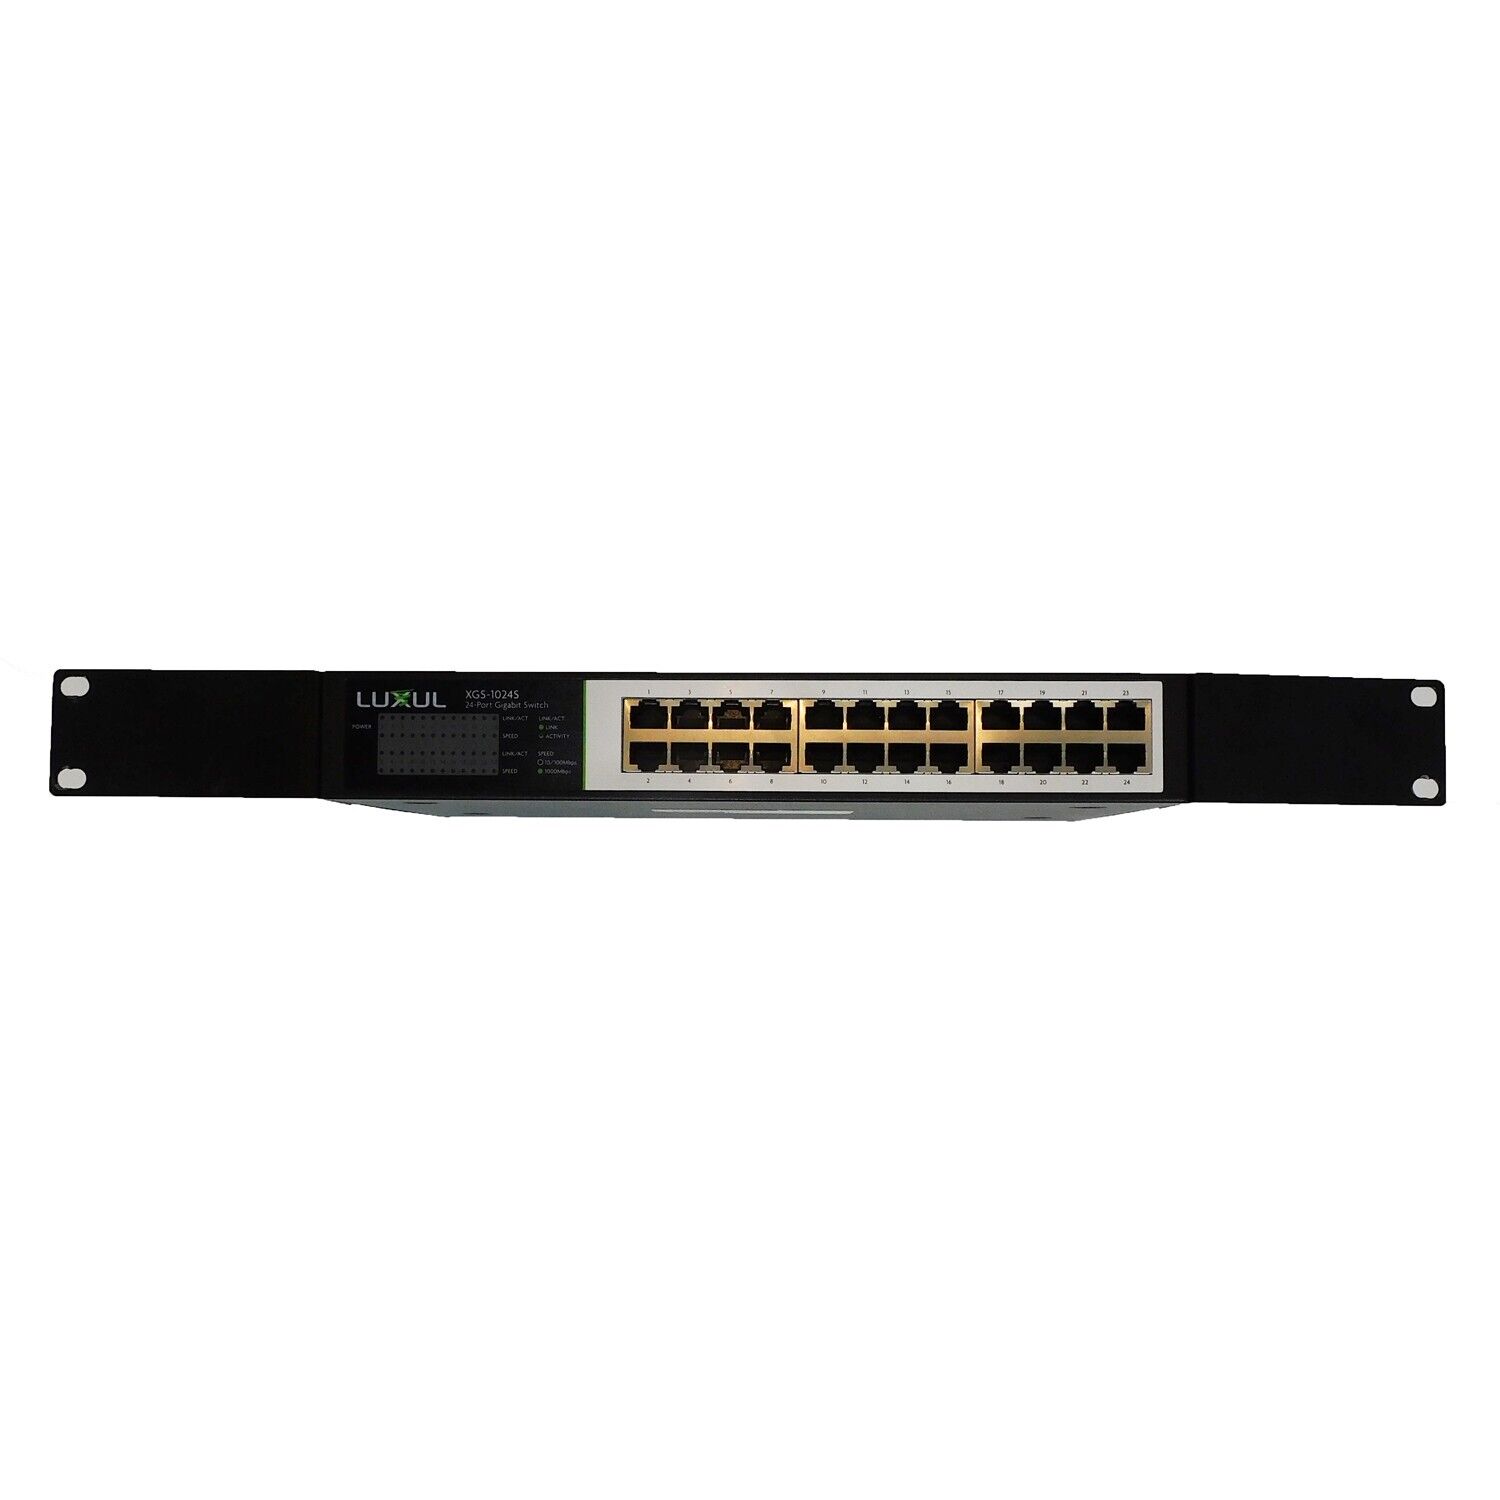 Luxul XGS-1024S 24-port Gigabit Flex Mount Network Switch